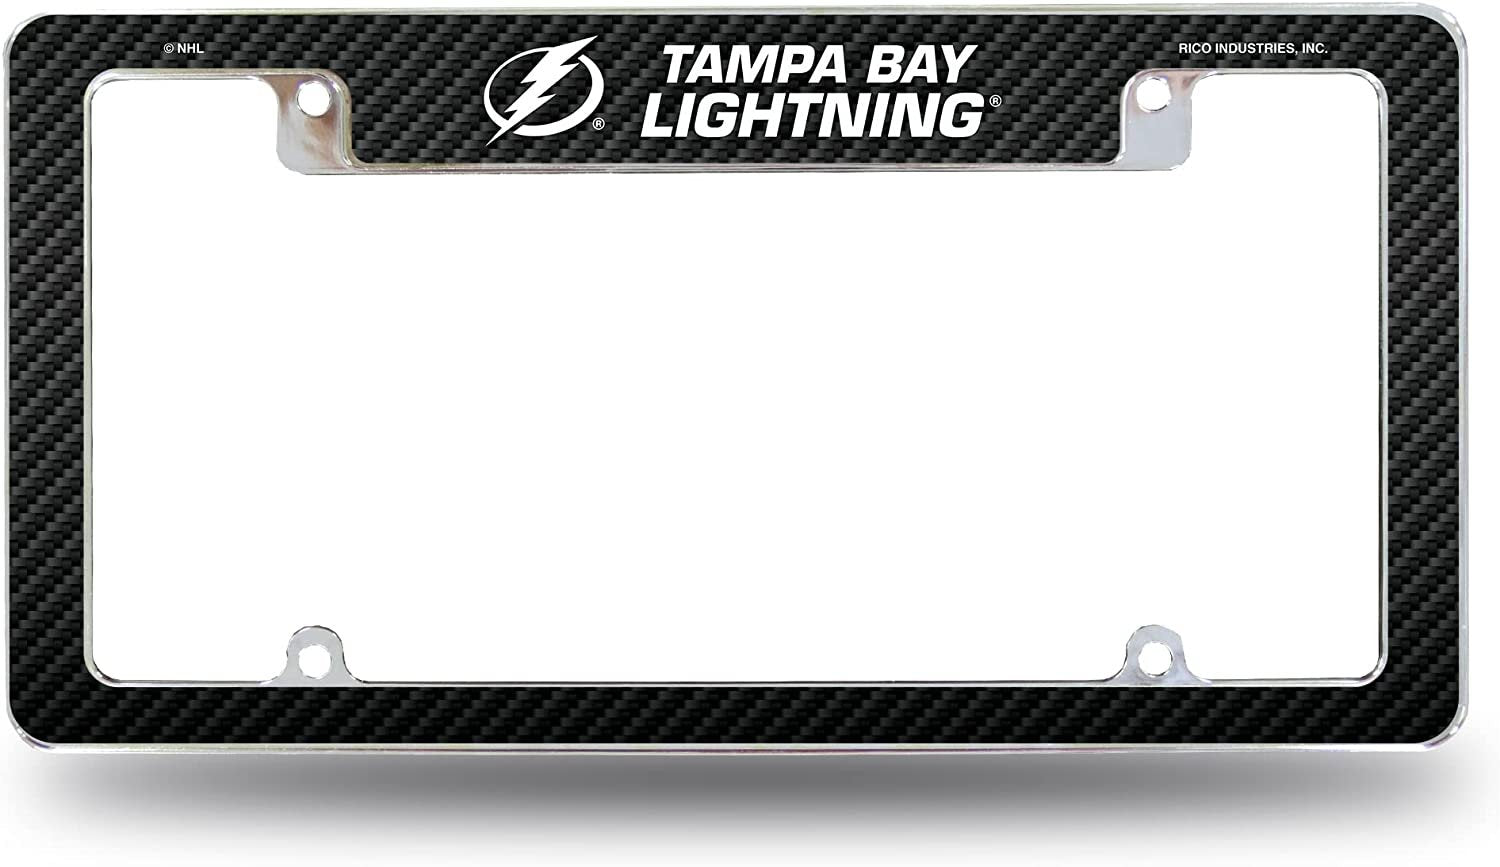 Tampa Bay Lightning Metal License Plate Frame Chrome Tag Cover Carbon Fiber Design 6x12 Inch